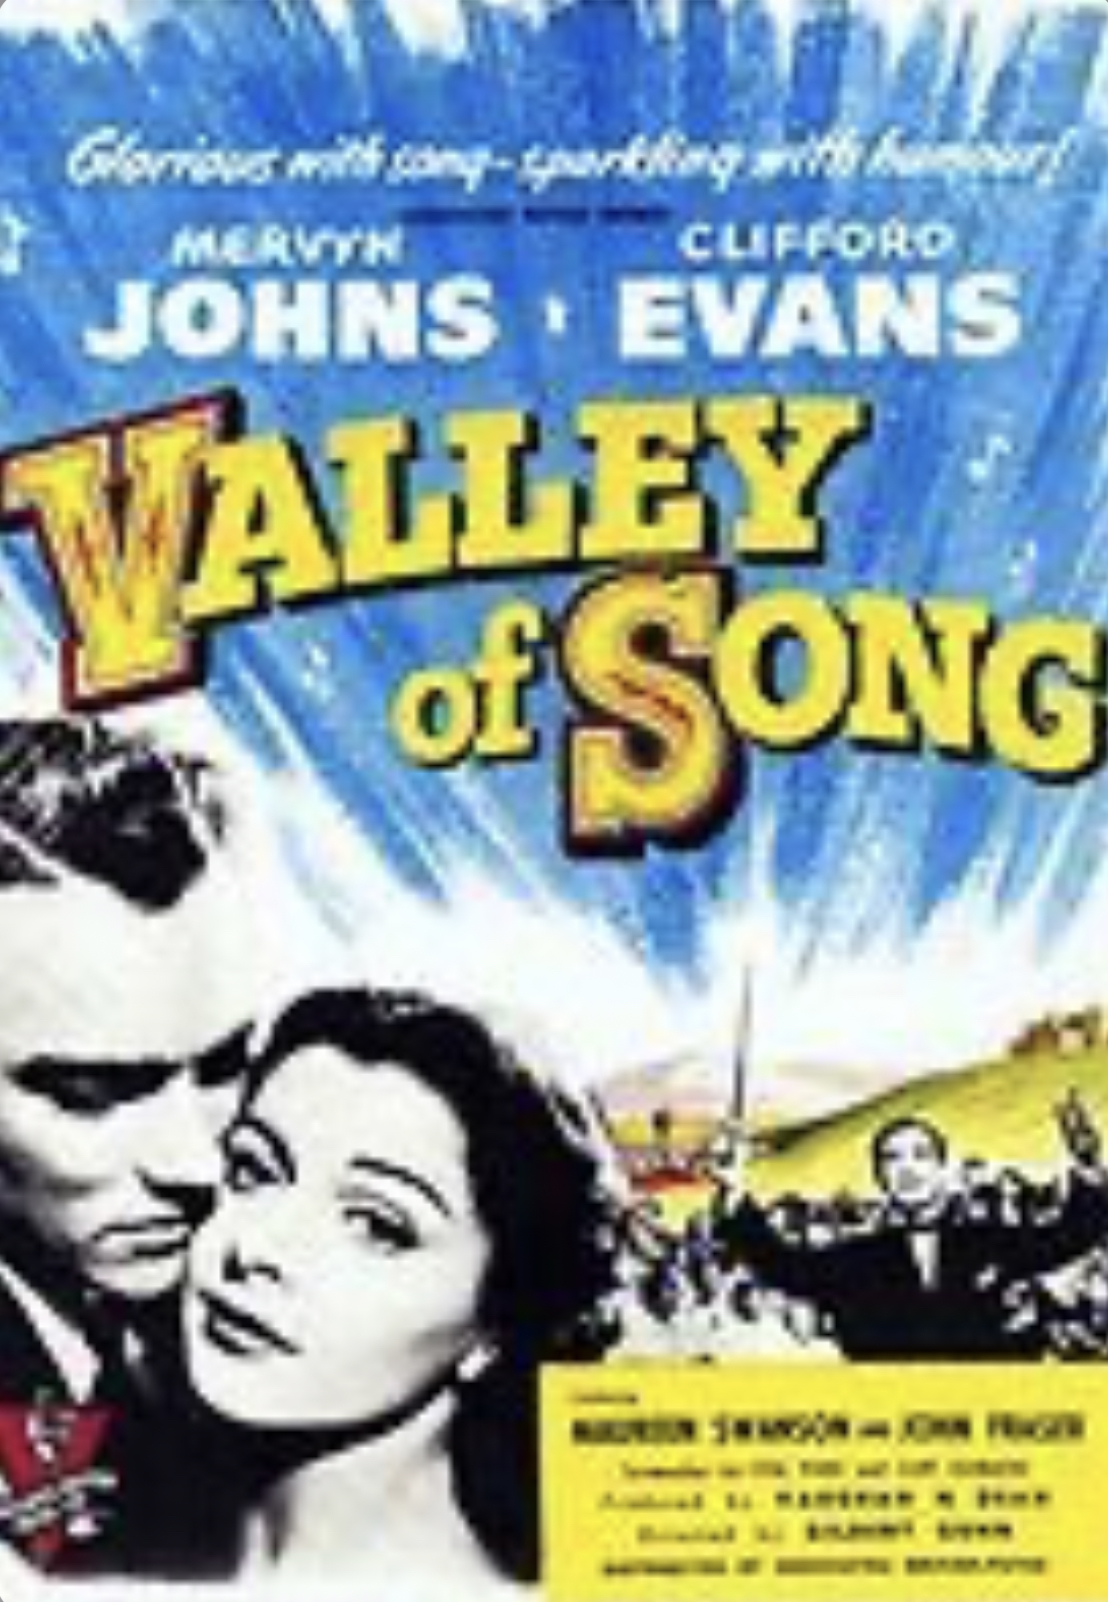 Valley of Song (1953) Screenshot 3